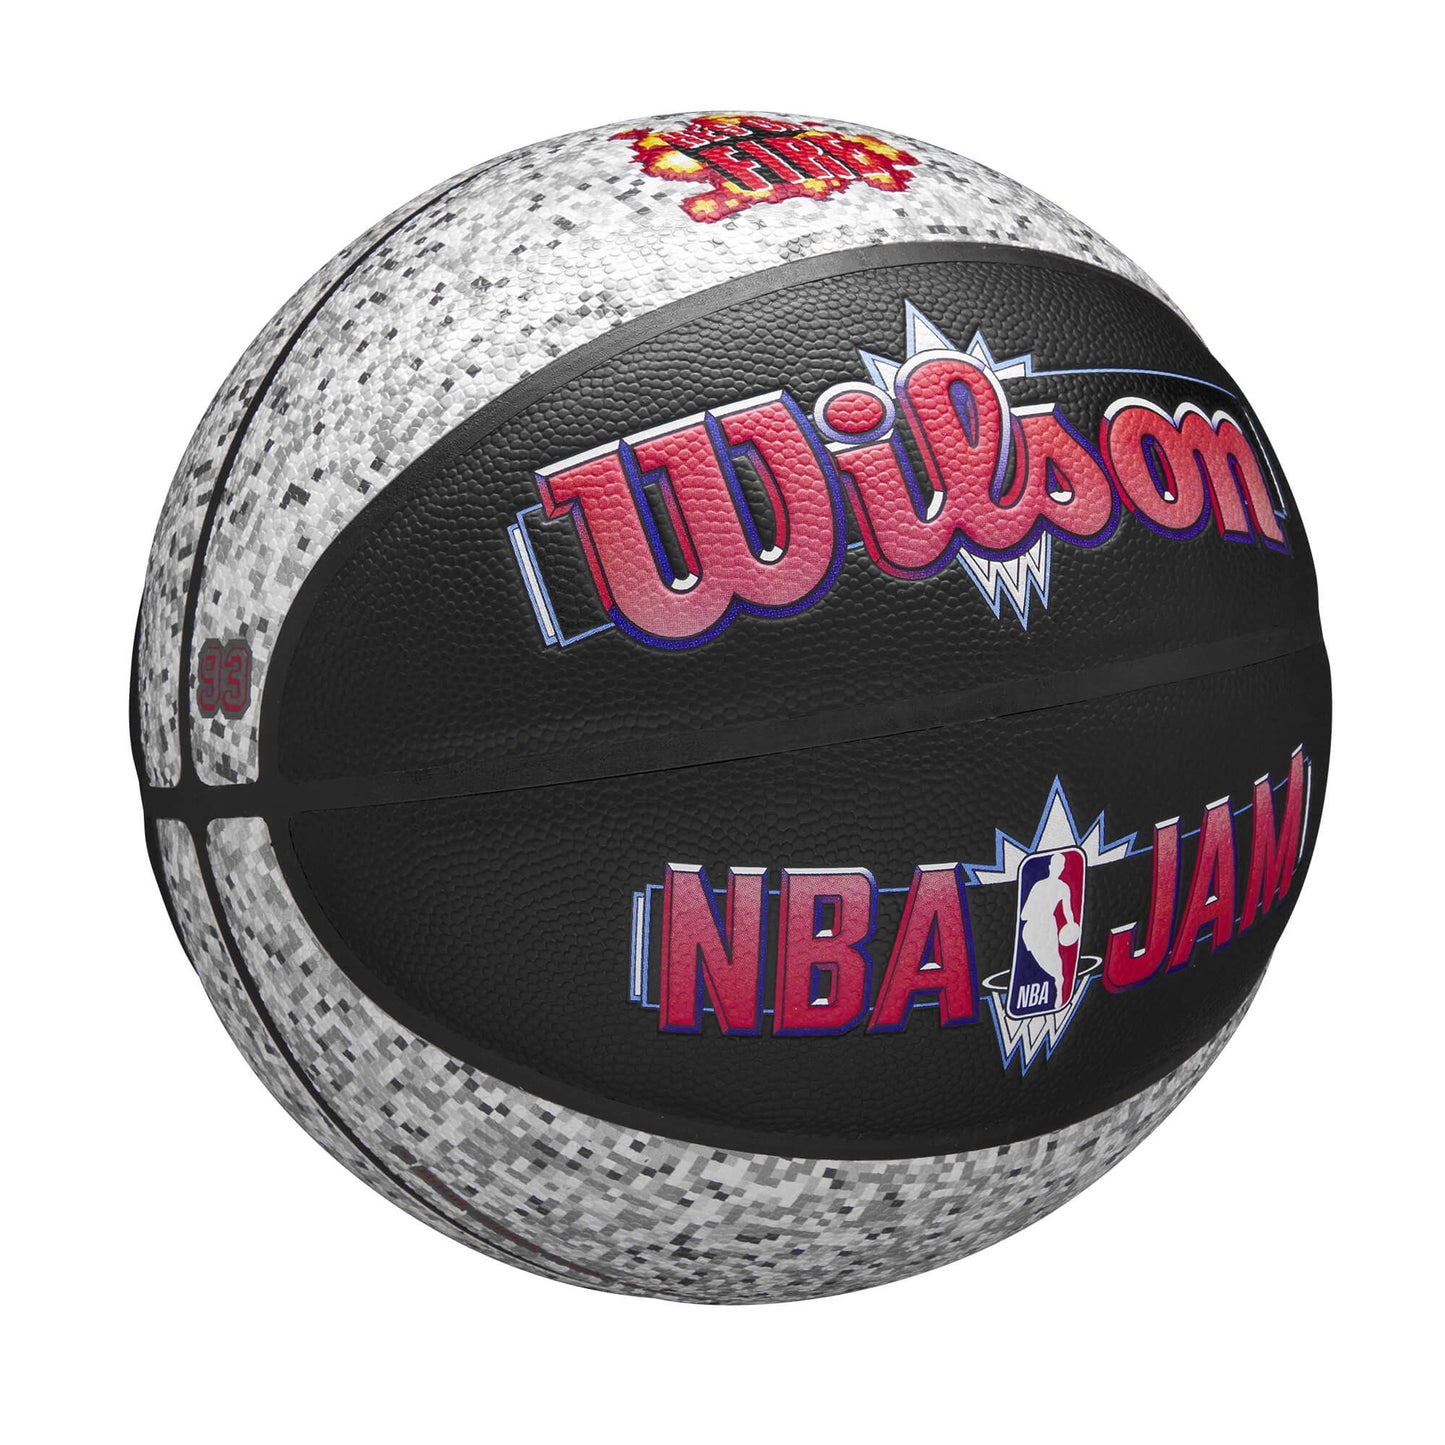 Wilson NBA Jam Indoor/Outdoor Basketball Ball (sz. 7)